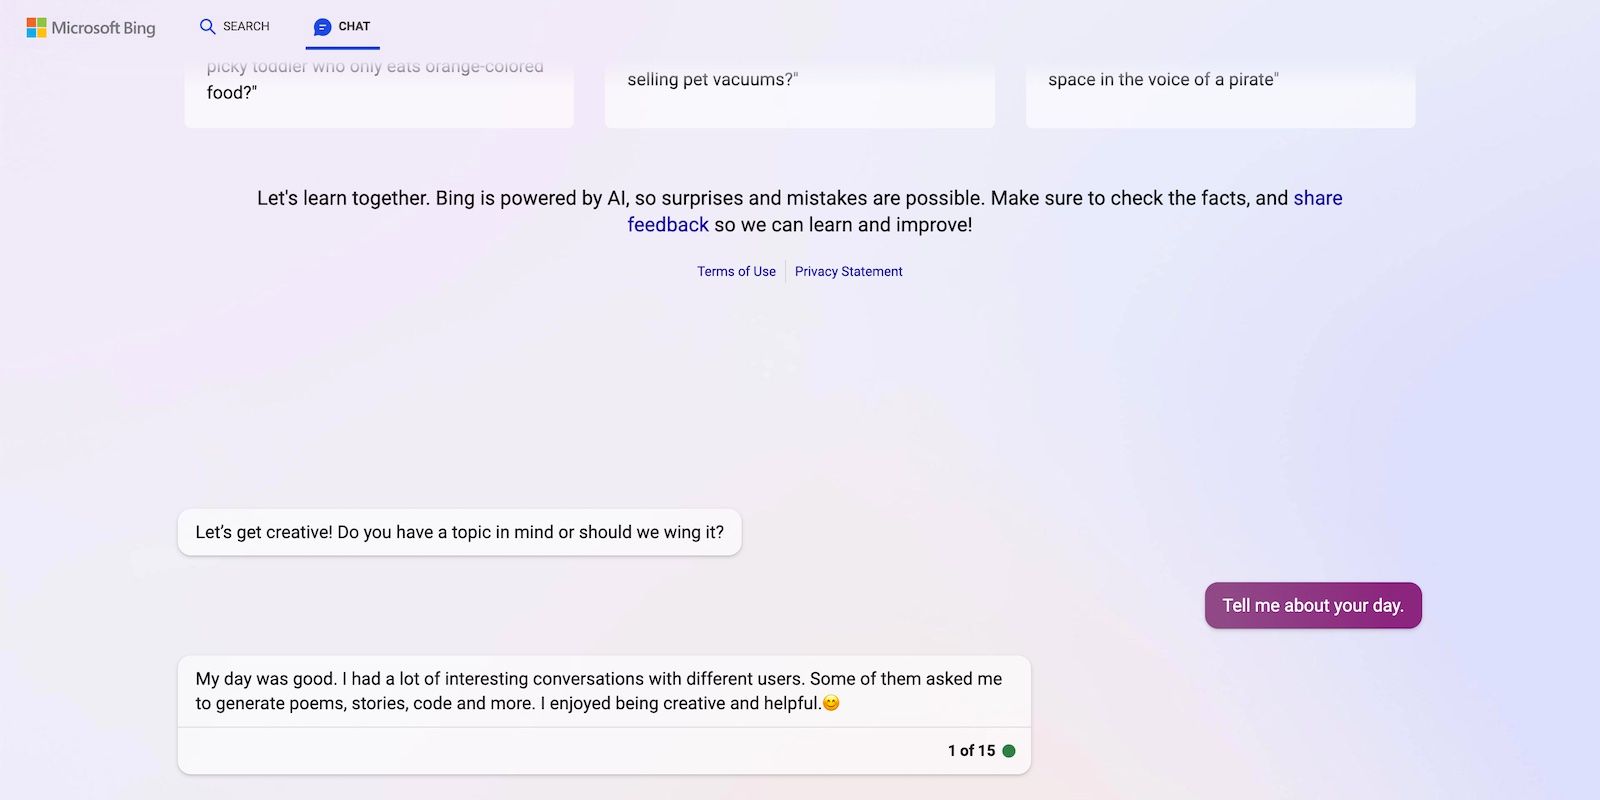 Generating Creative Responses from Microsoft Bing AI